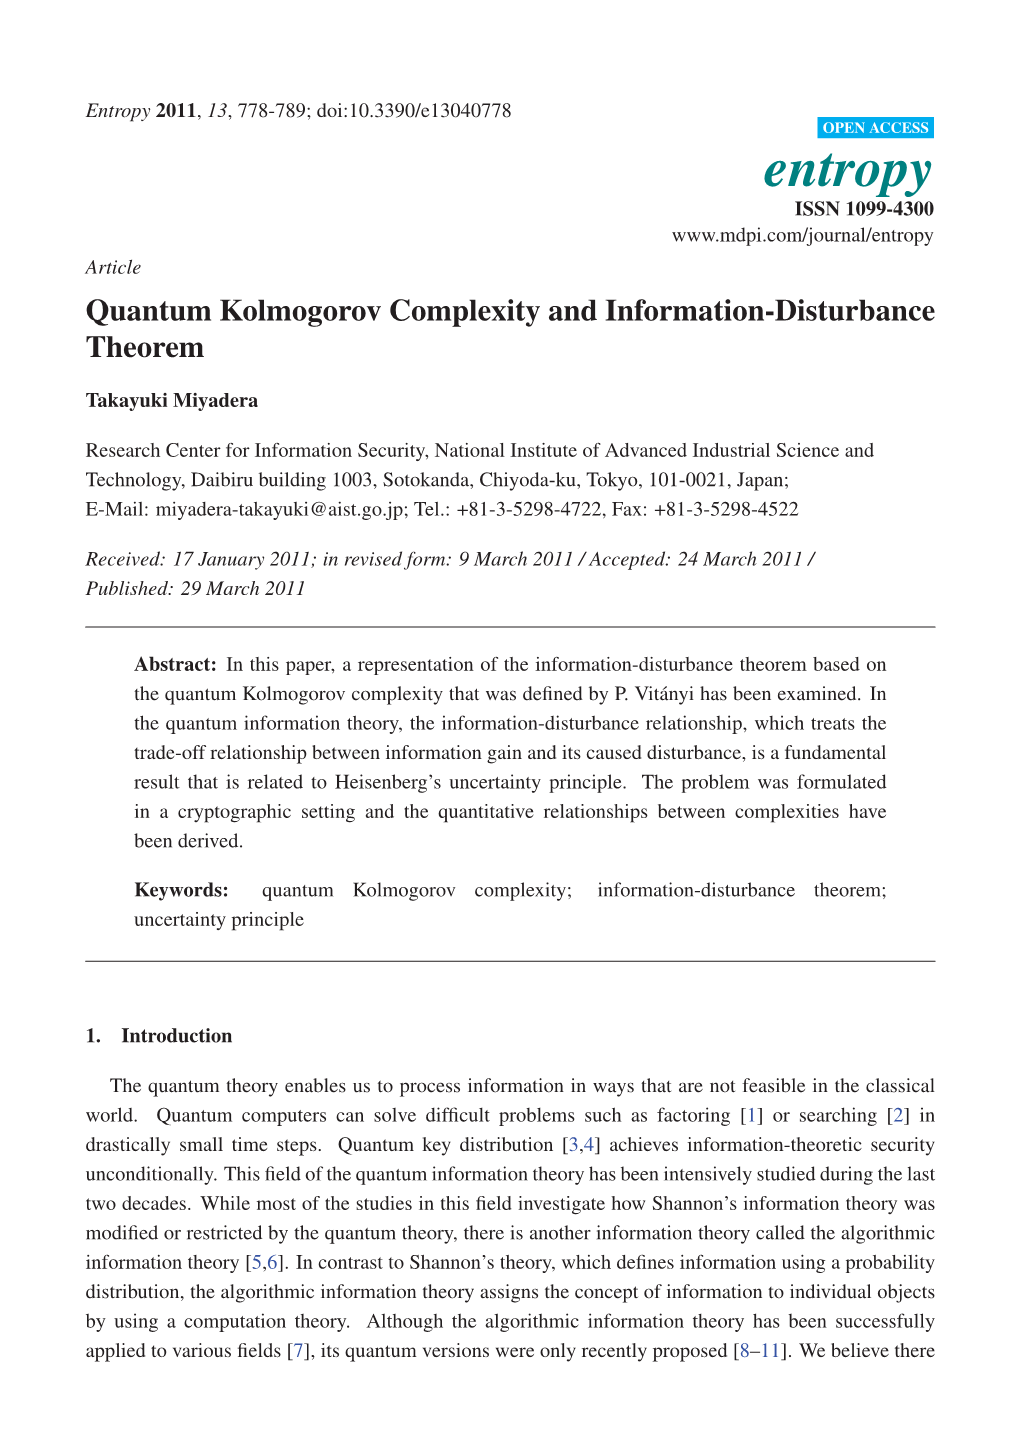 Quantum Kolmogorov Complexity and Information-Disturbance Theorem